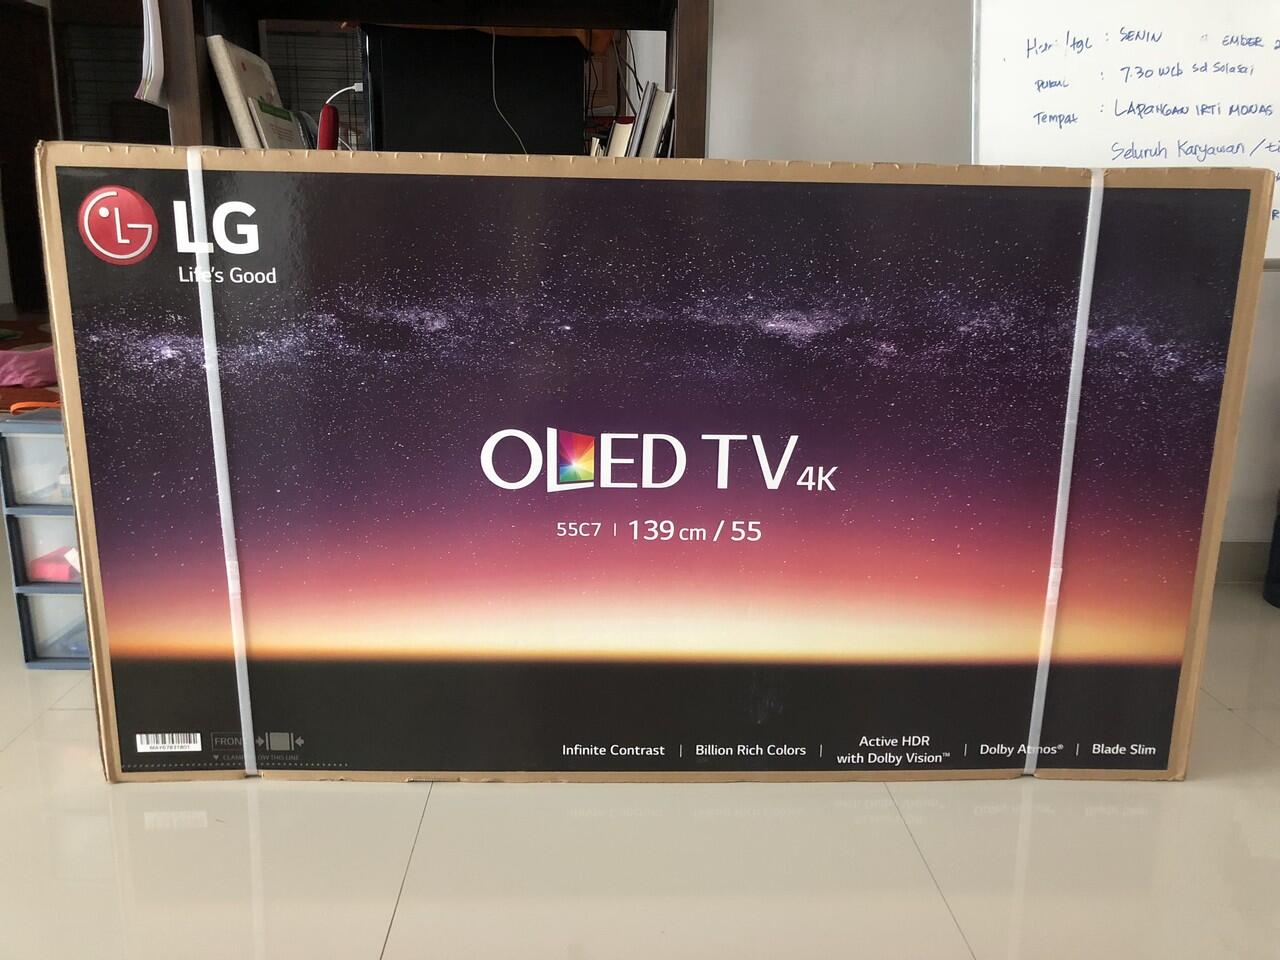 Haier oled s9 ultra купить. Телевизор Haier 55 OLED s9 Ultra. Телевизоры LG OLED коробка. Комплект поставки LG OLED 55c2 из Польши.